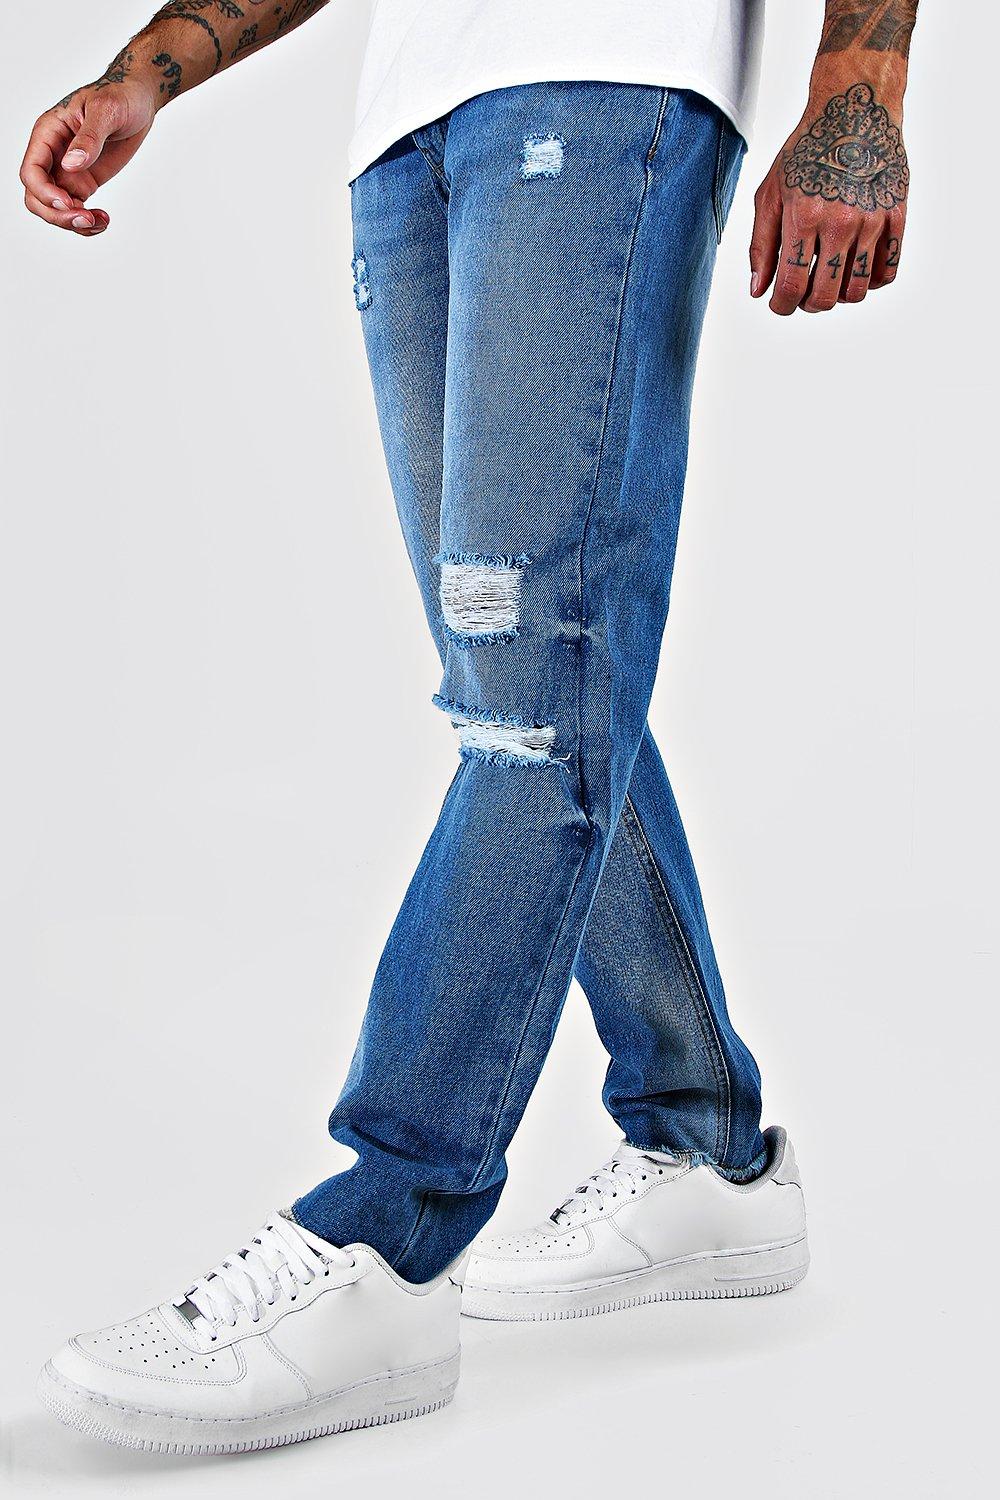 slim fit damaged jeans